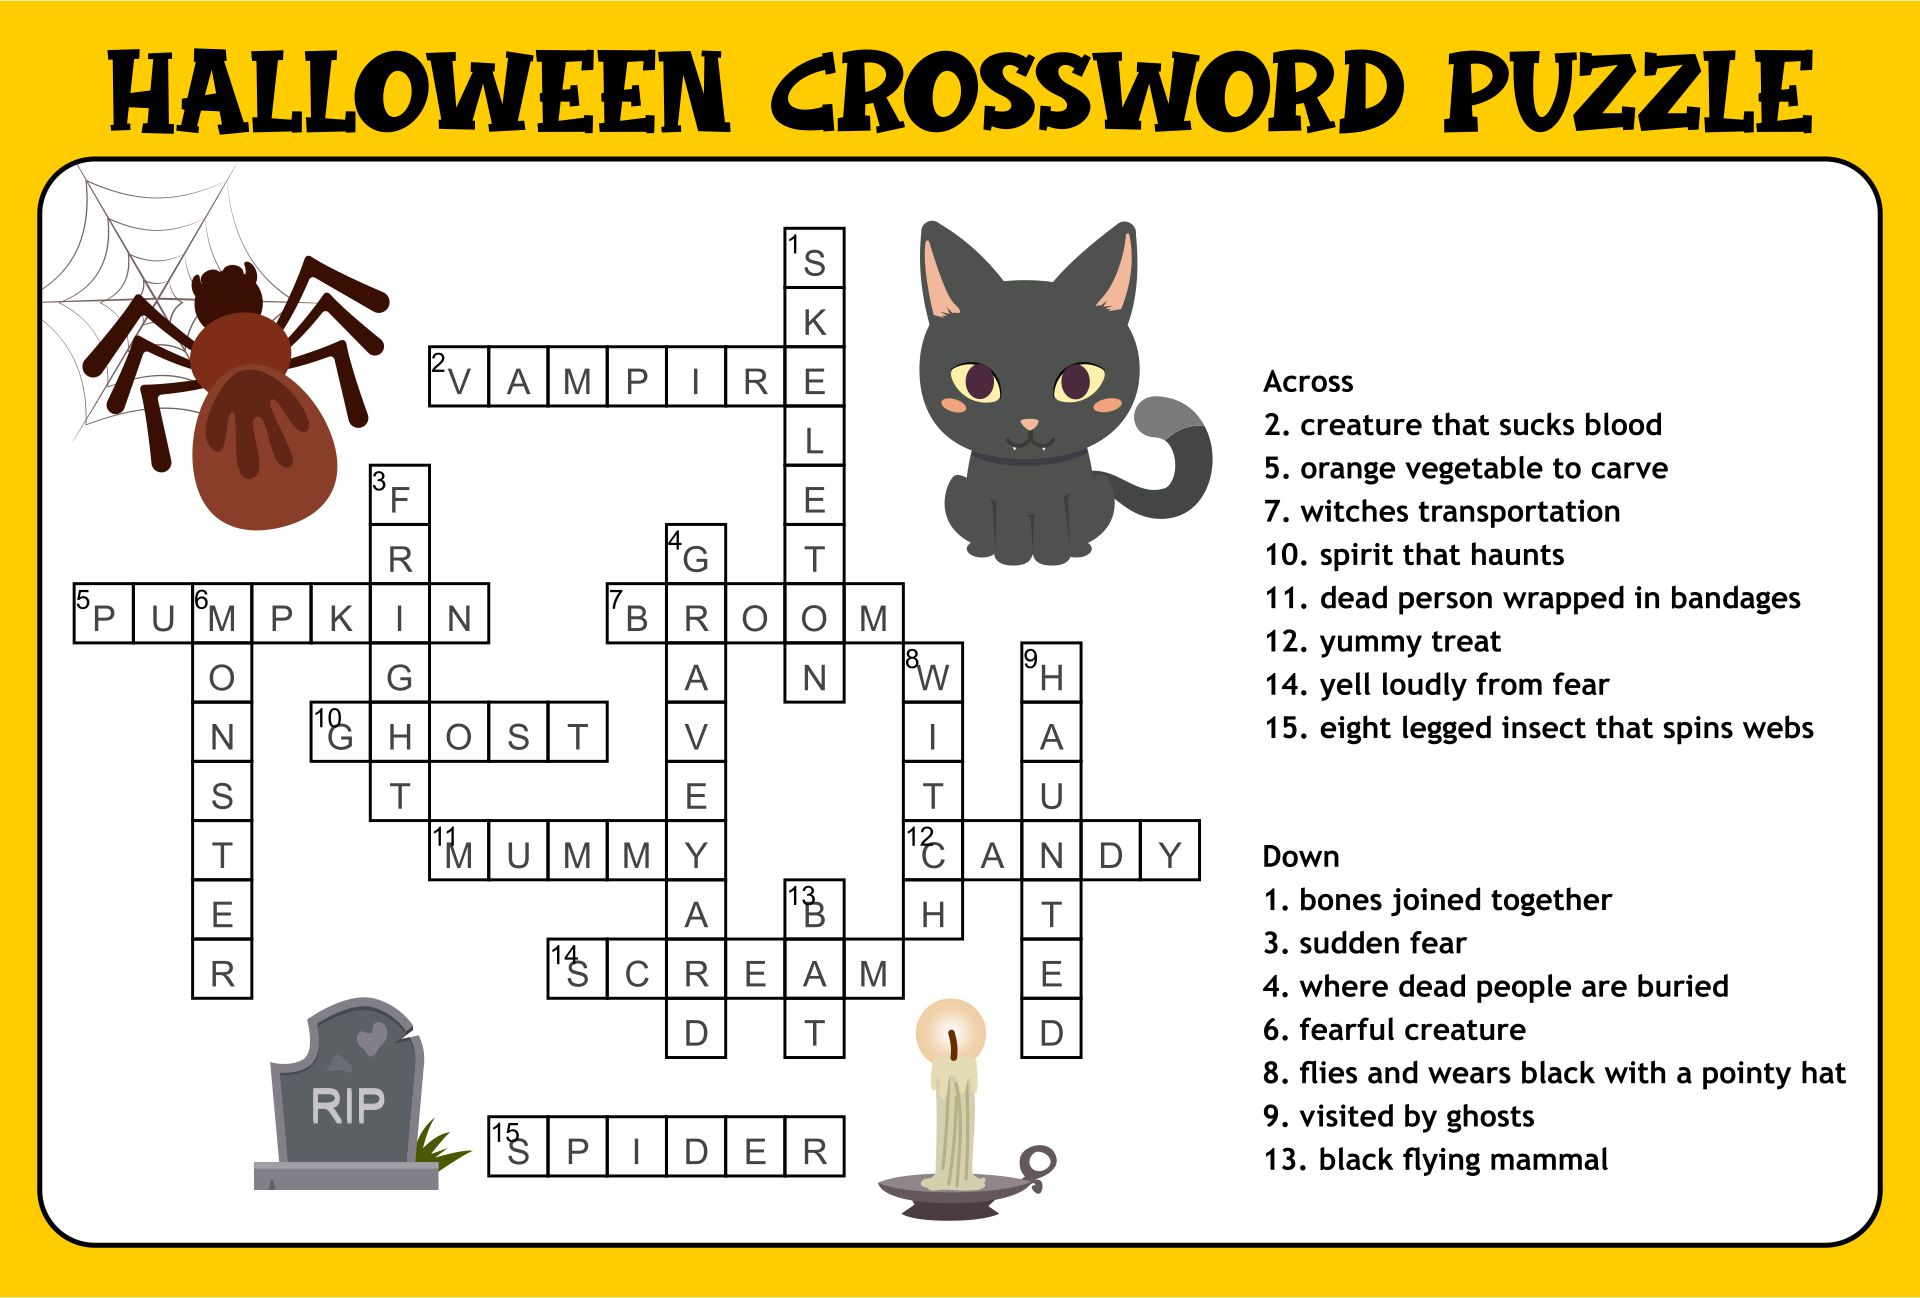 Halloween Crossword Puzzle Answers